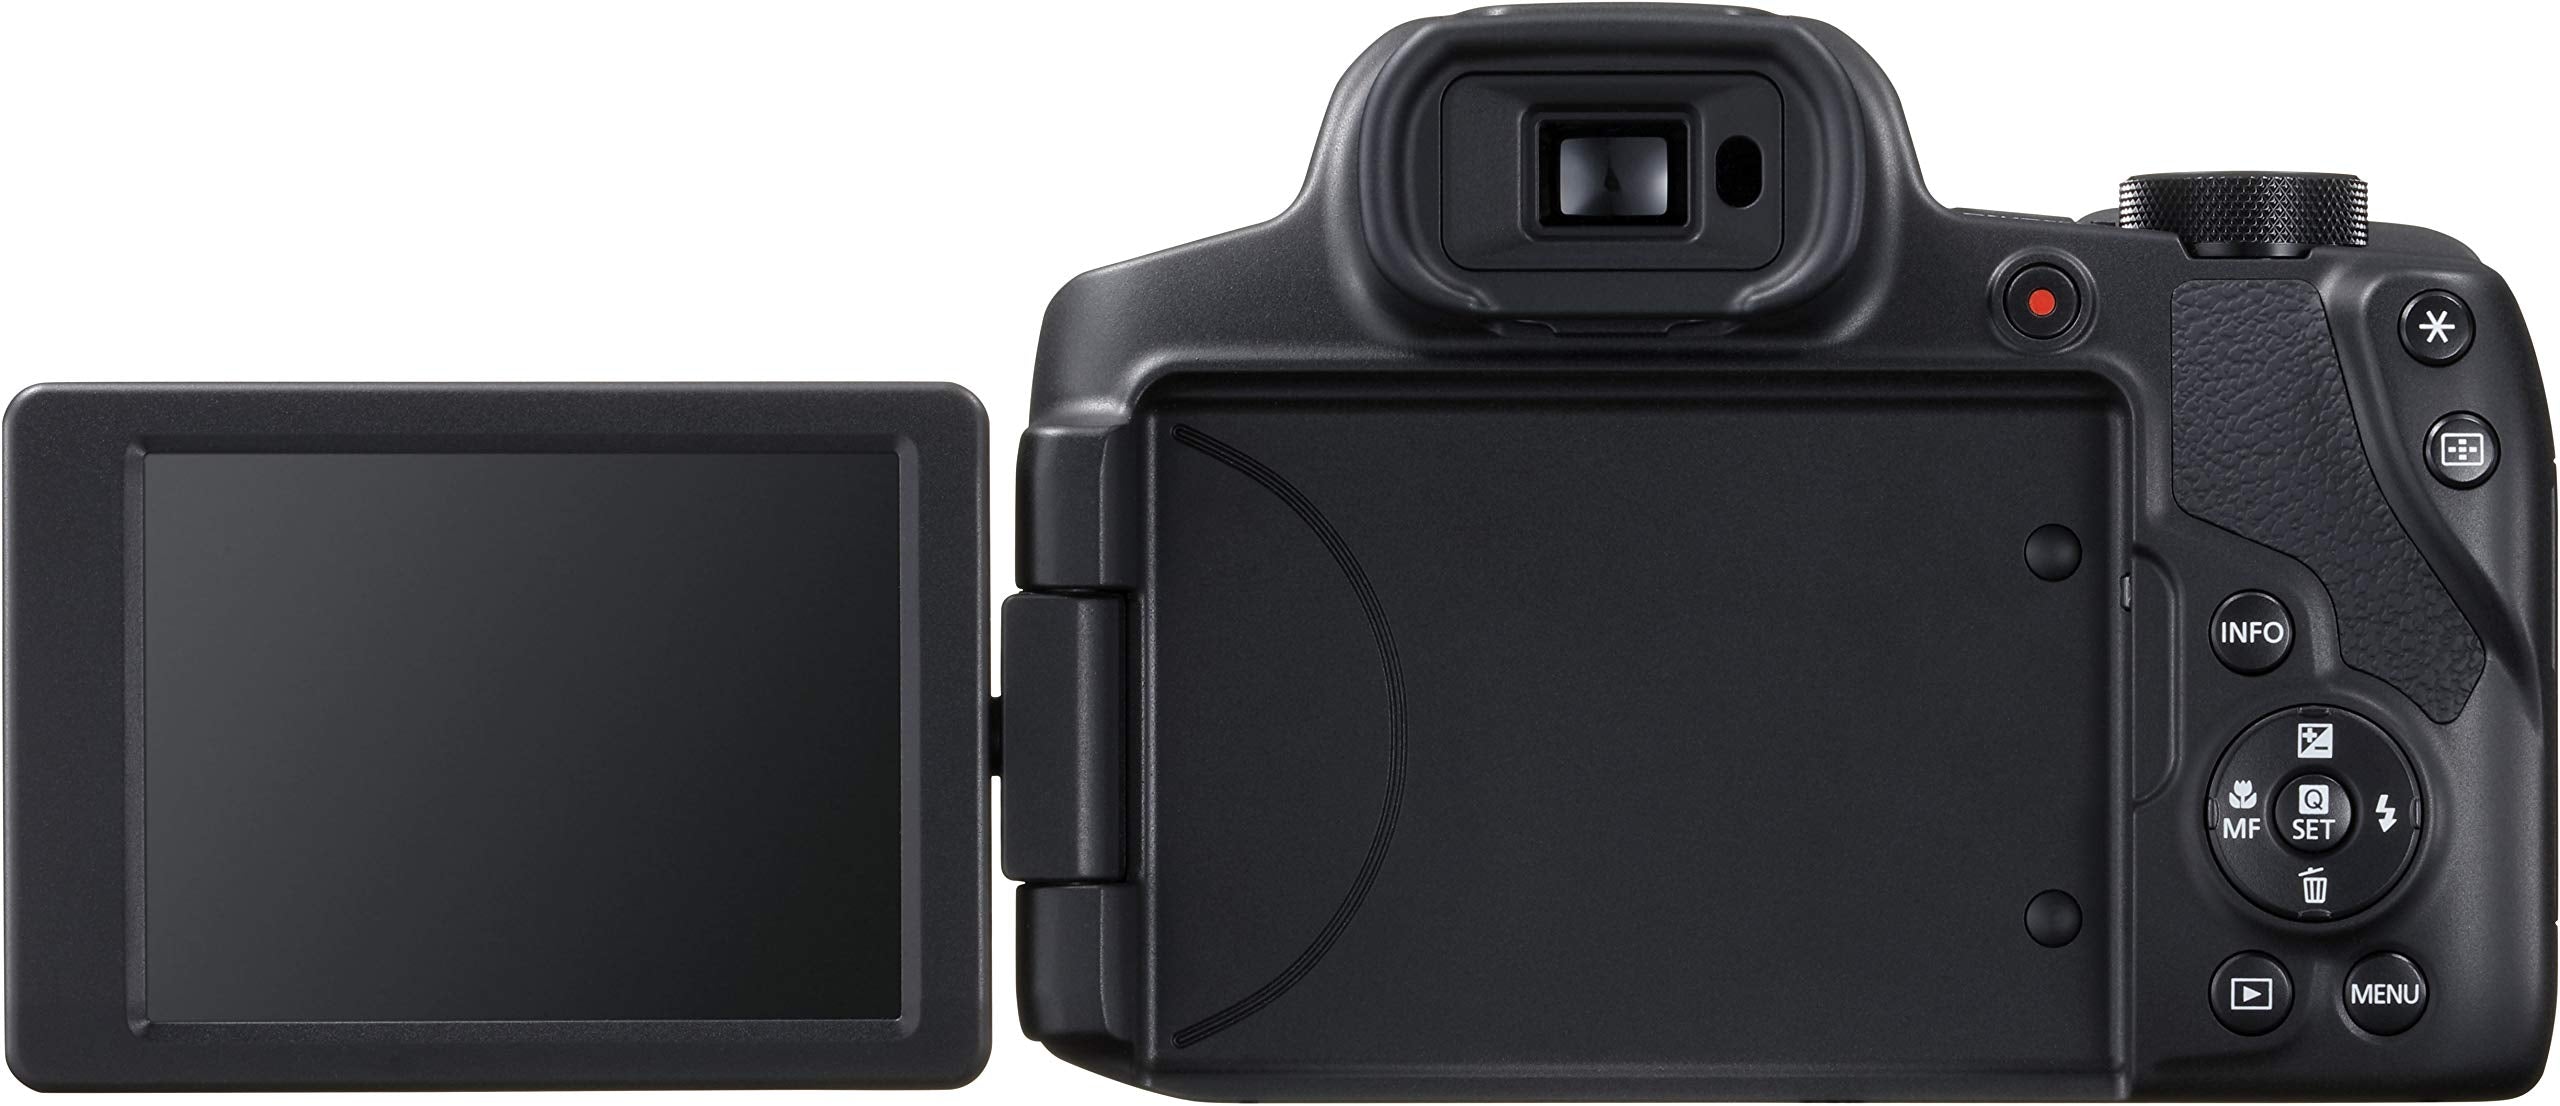 Canon Power Shot Sx70 Hs 4K Uhd, 20.3 Mp, Black